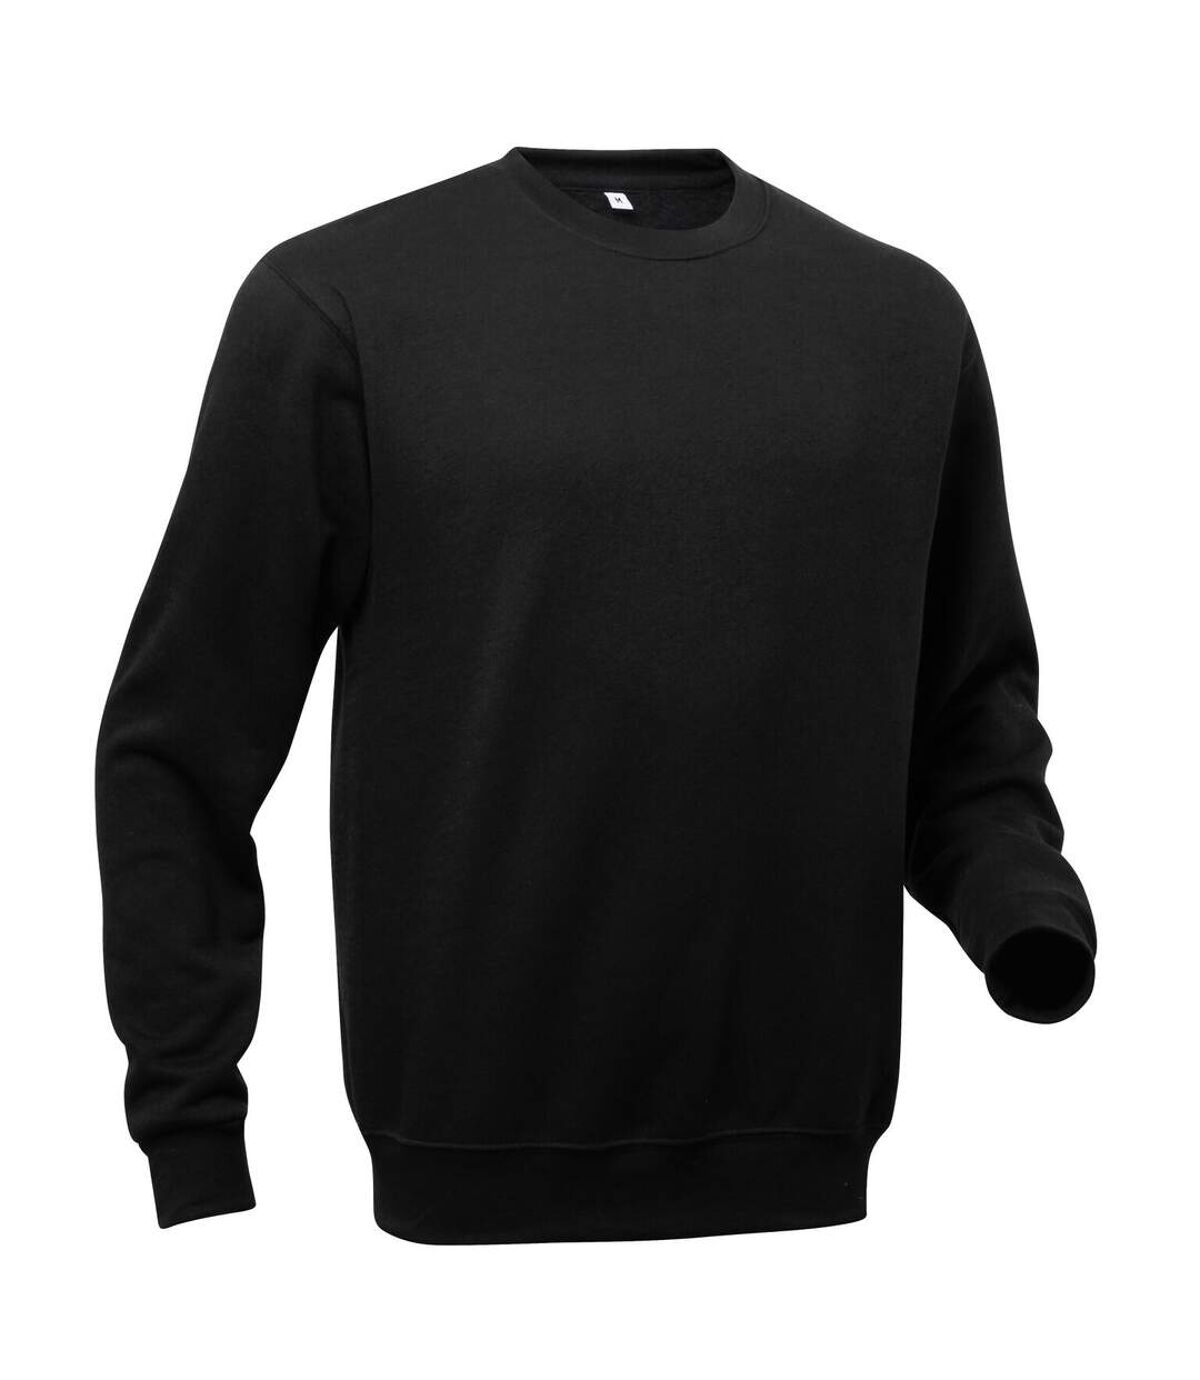 Pro RTX - Sweat-shirt - Homme (Noir) - UTRW6174